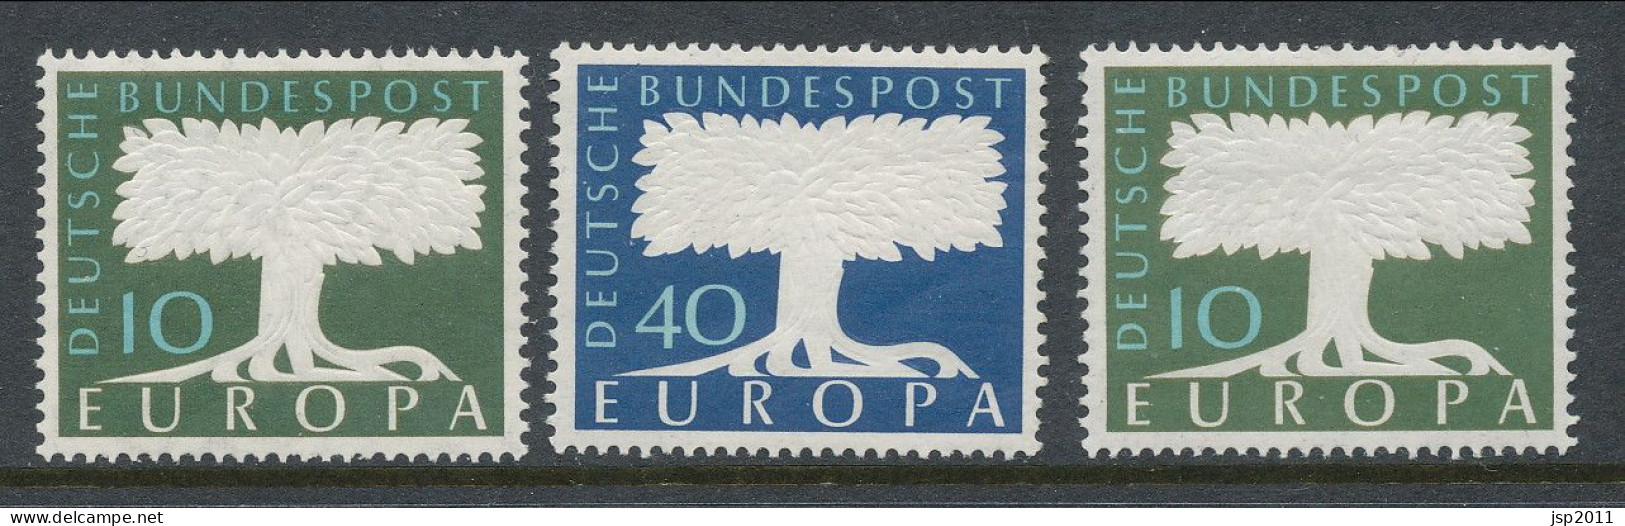 Europa CEPT 1957,  Germany, MNH** - 1957